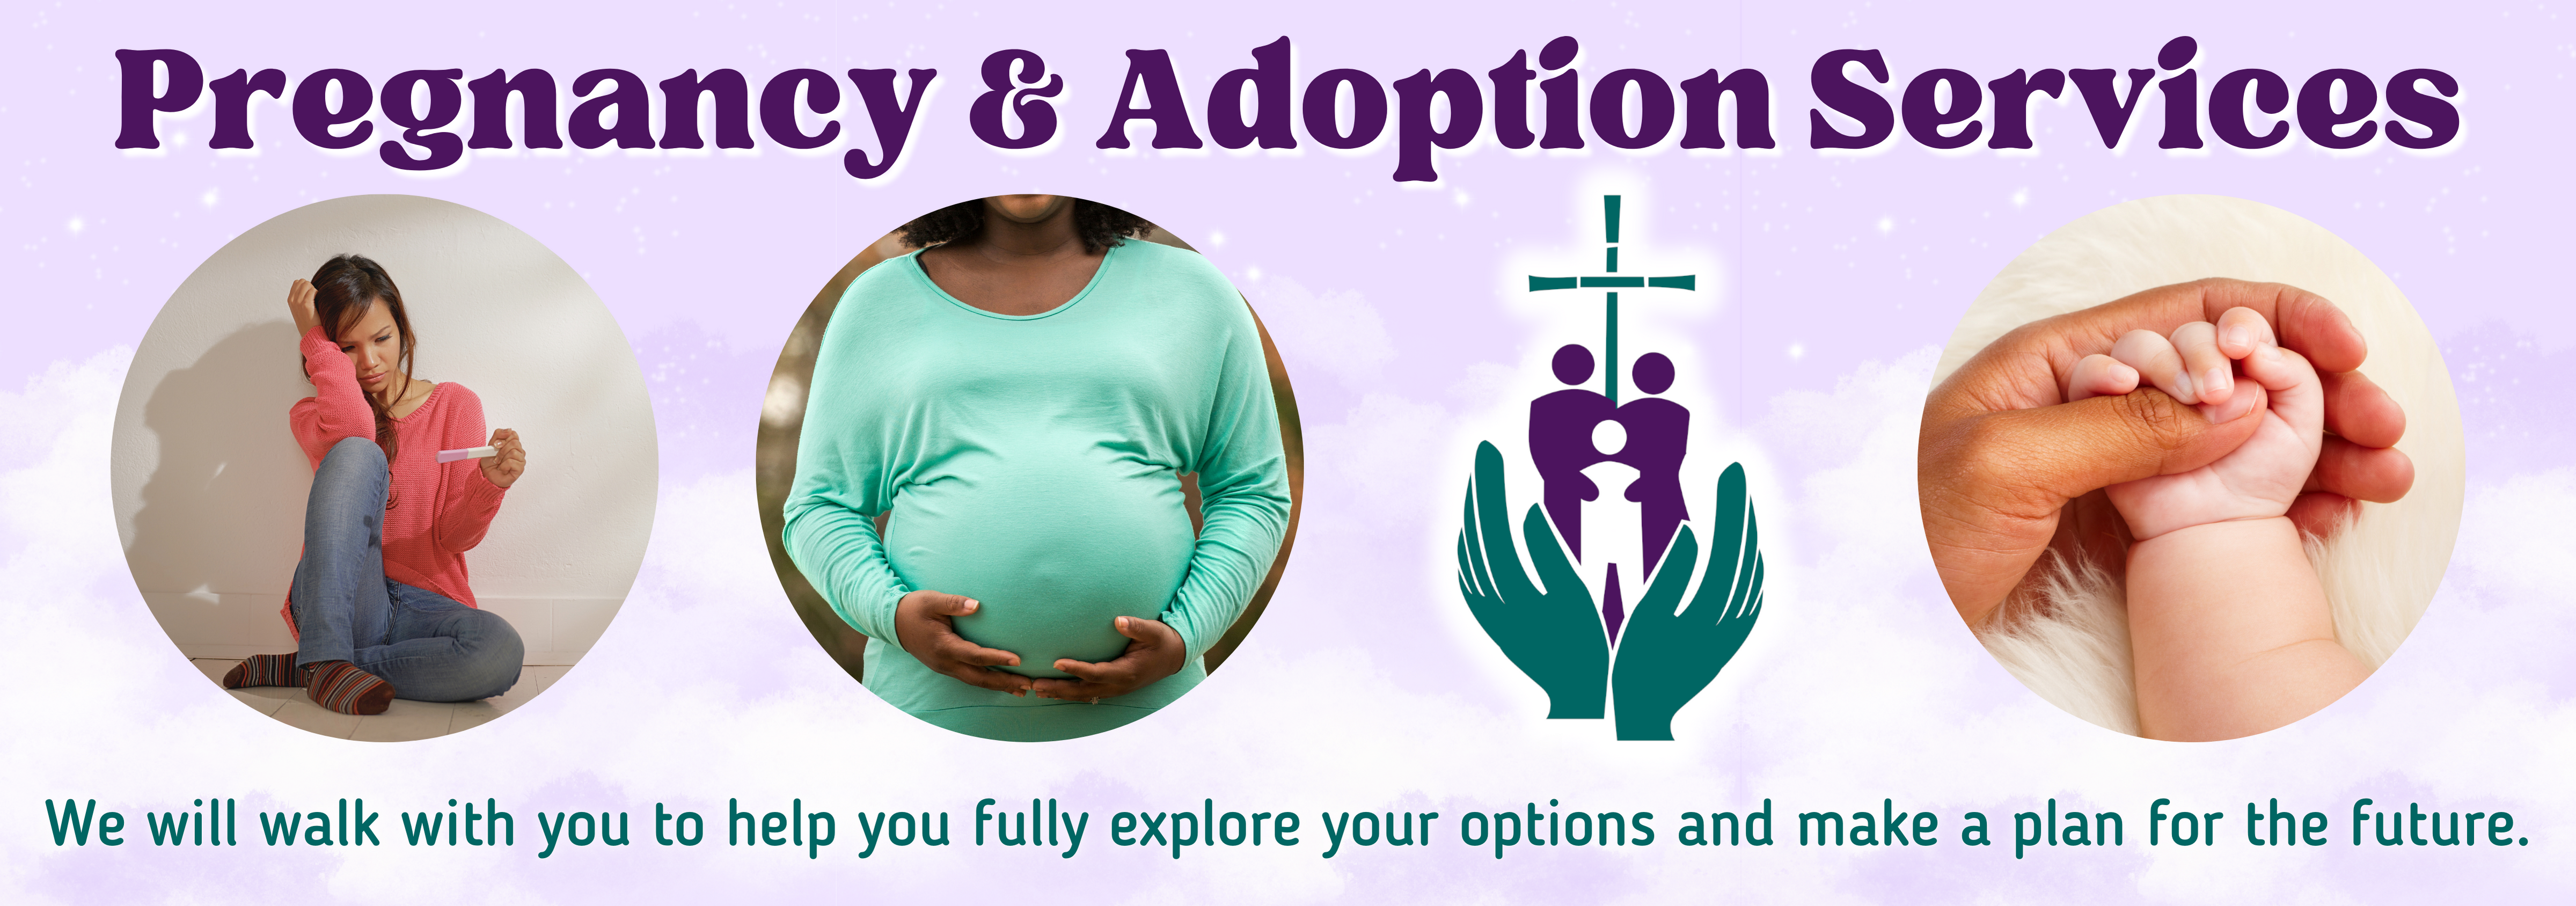 Pregnancy & Adoption Services headers